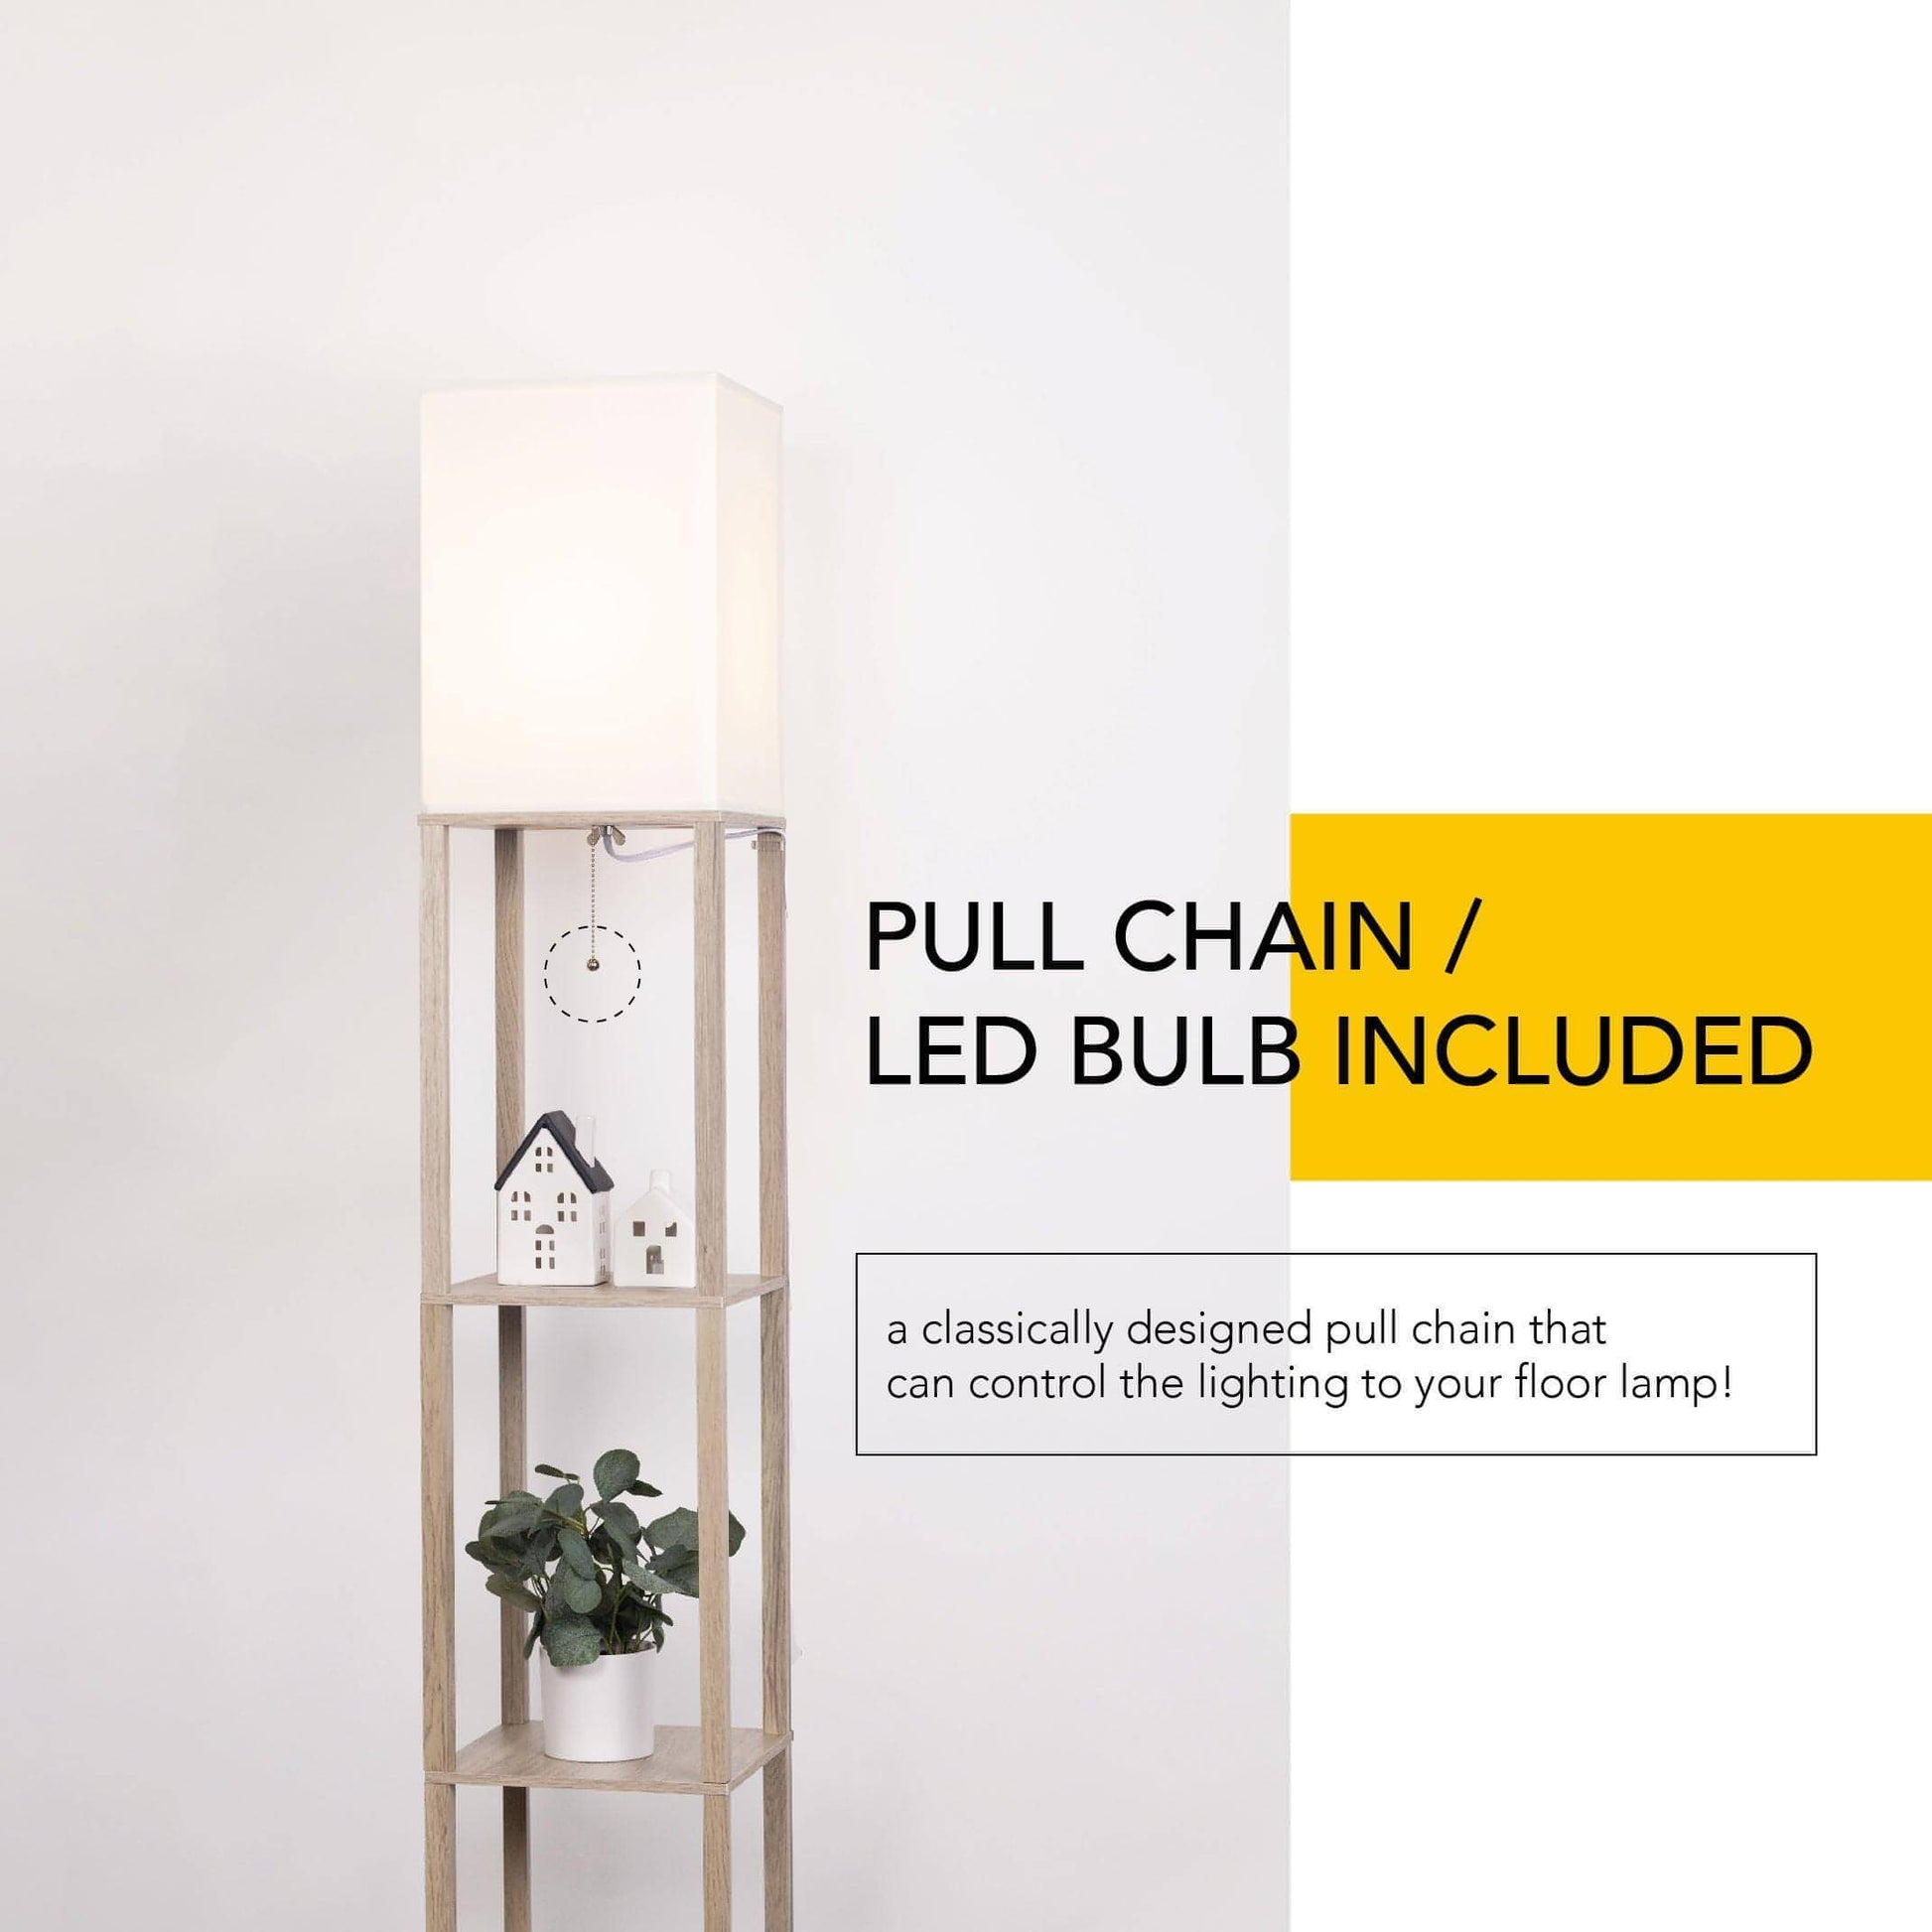 Alvis Minimalistic LED Floor Lamp with Display Shelves - FENLO